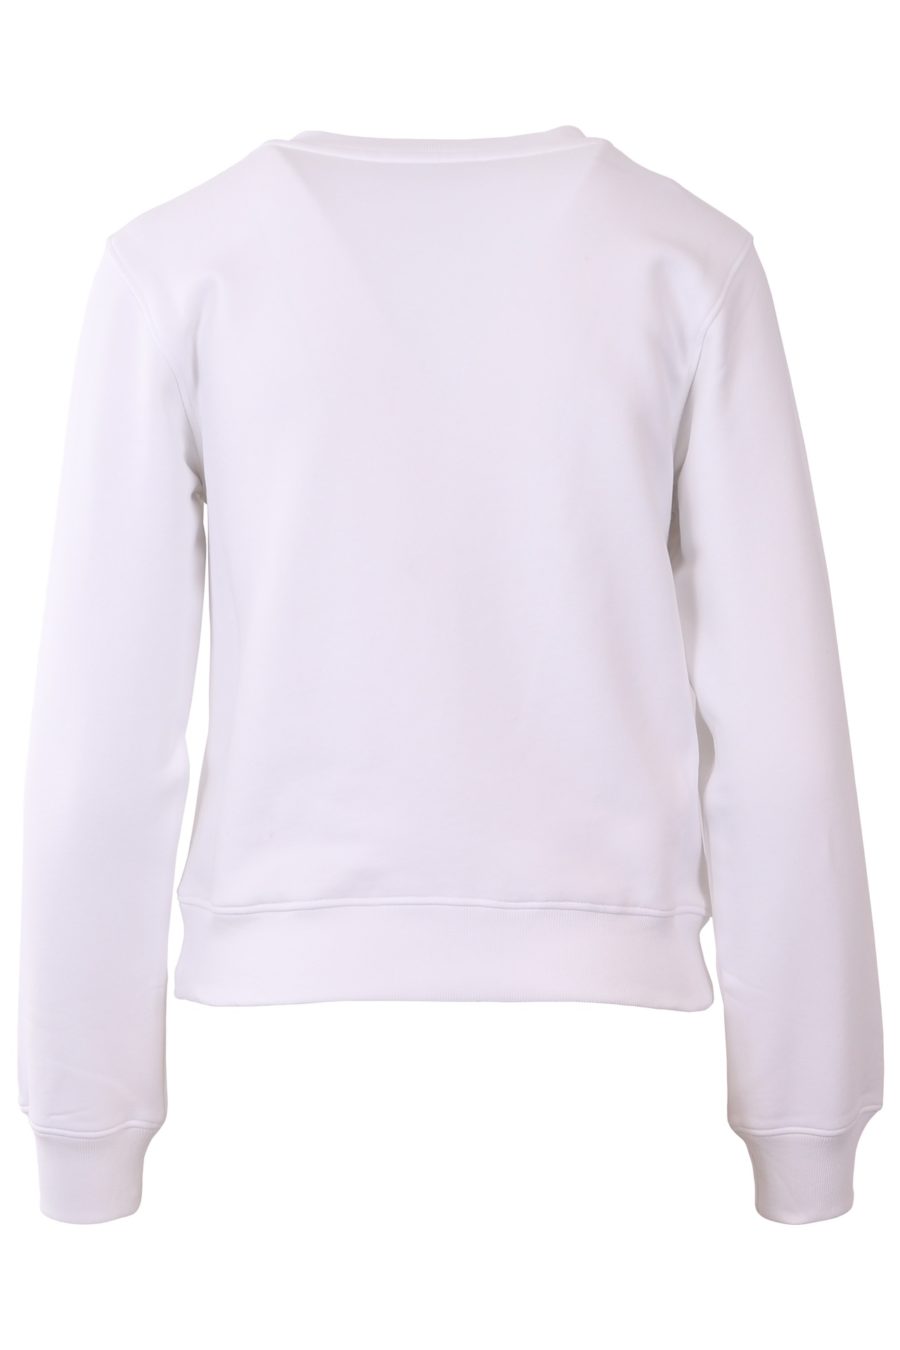 Sweatshirt Moschino Couture white with milano logo - dbc0dd88f277c33f70d1b0d833f641975142fe06